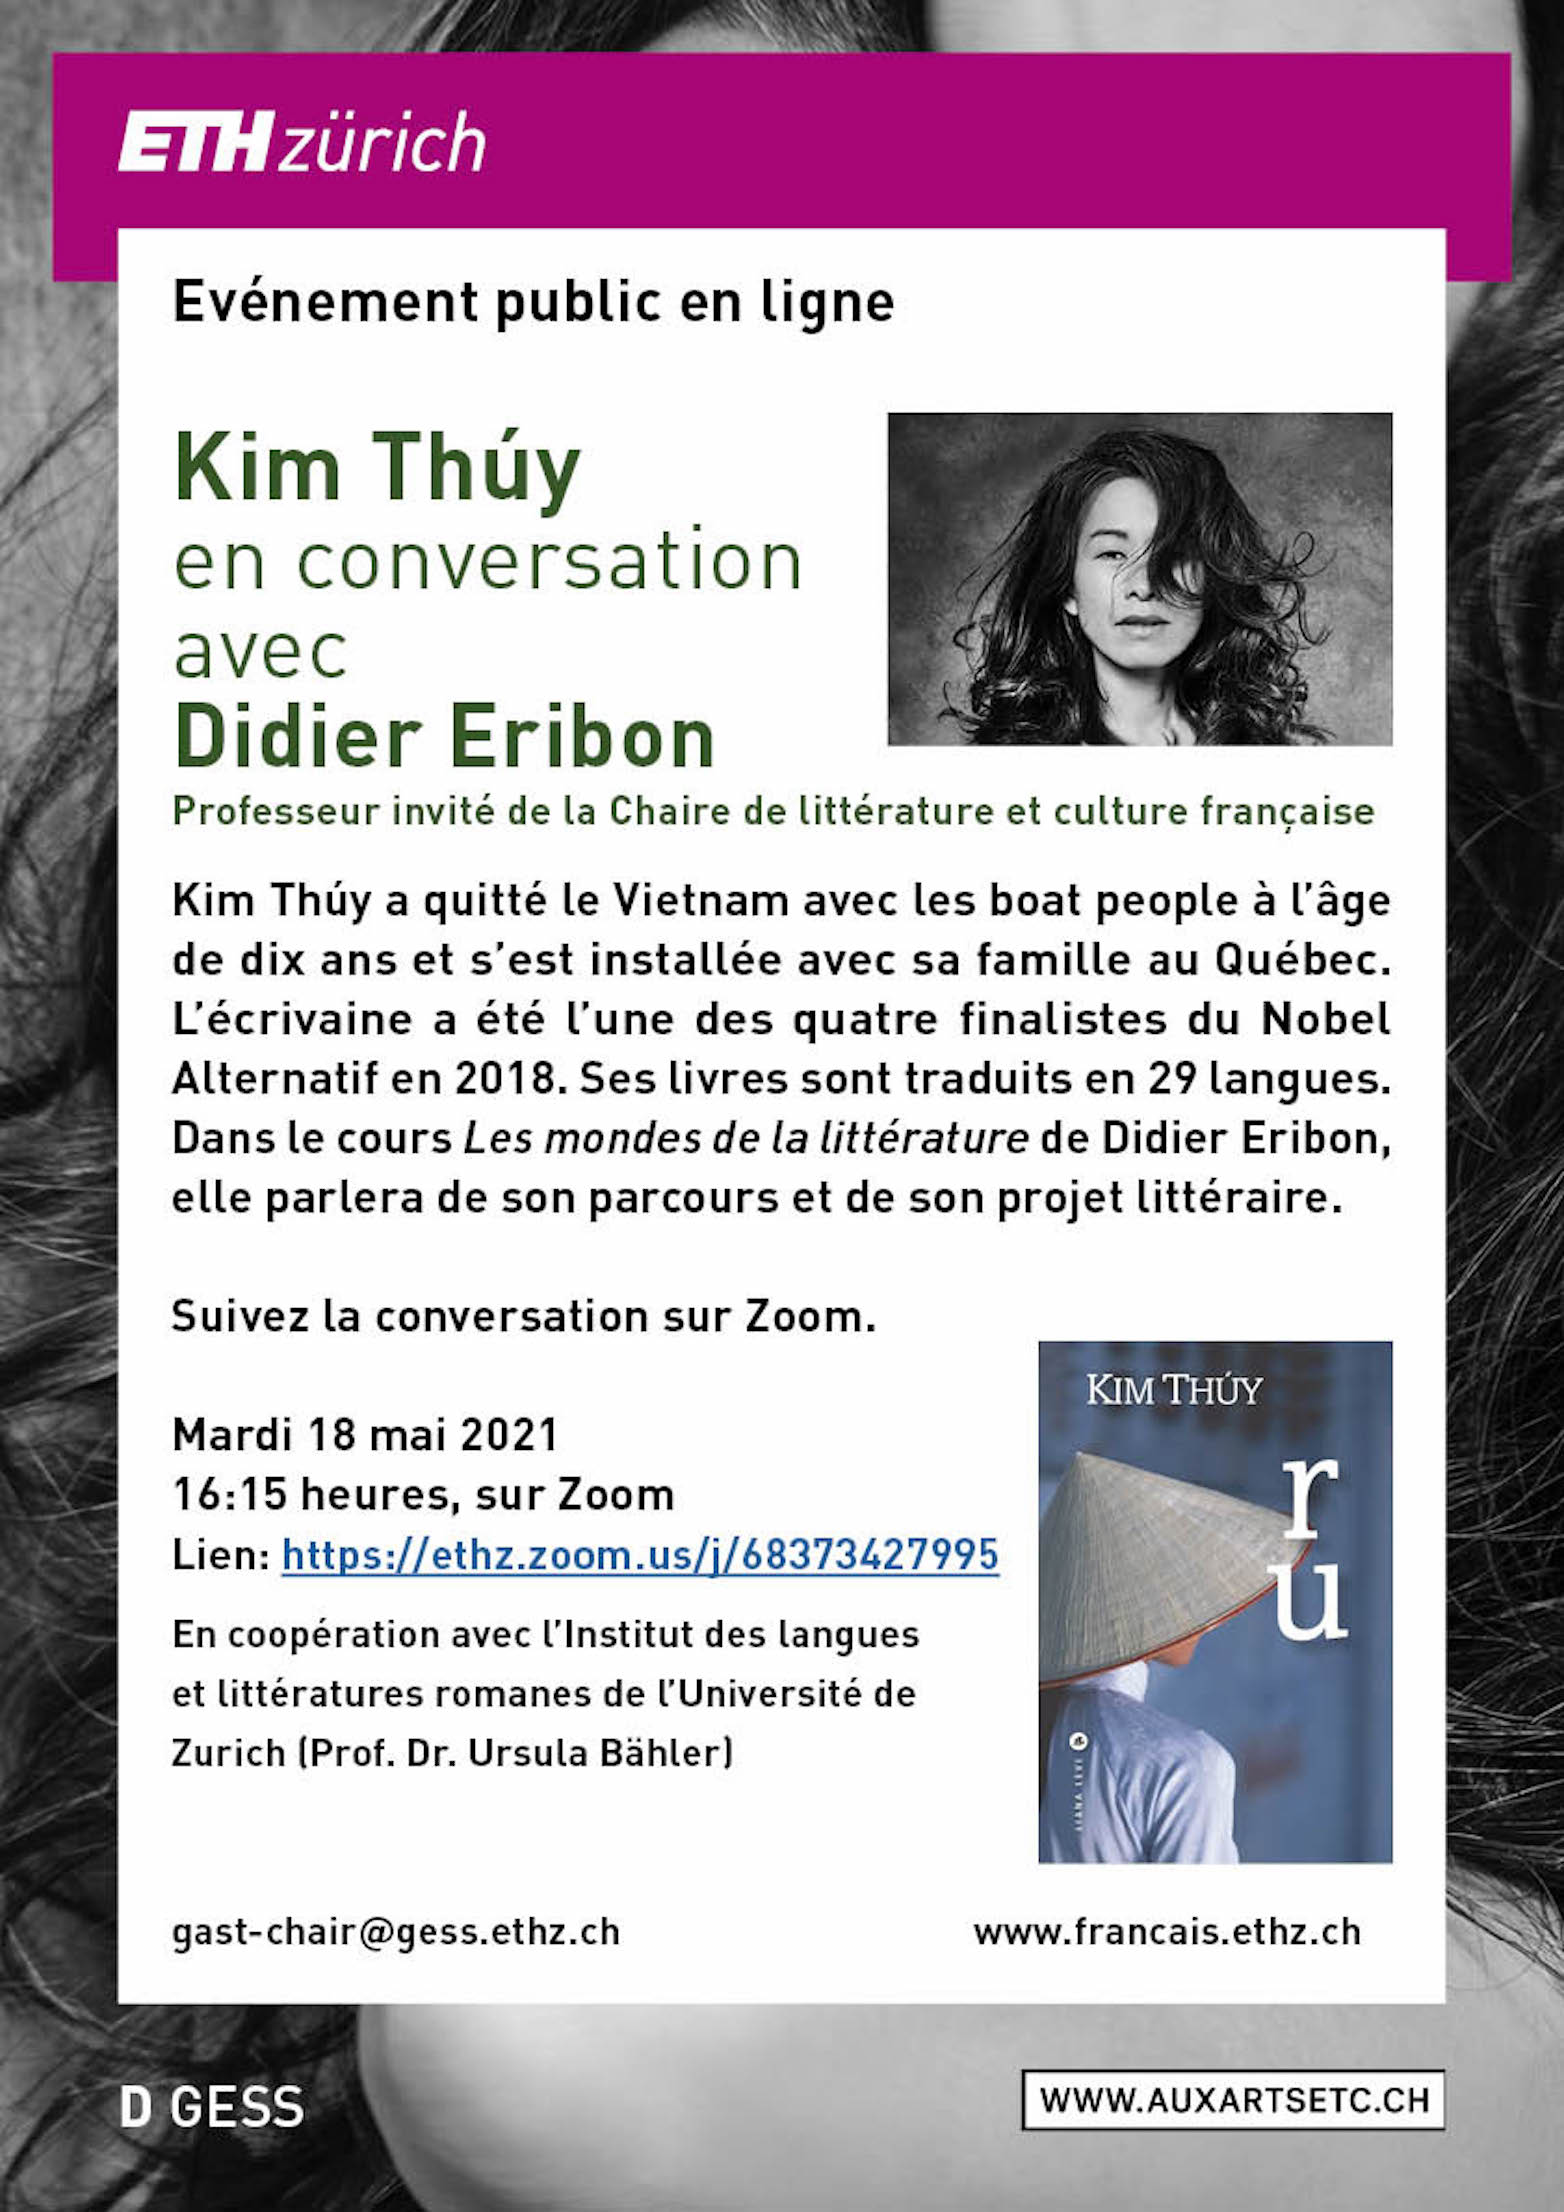 Kim Thuy en conversation avec Didier Eribon